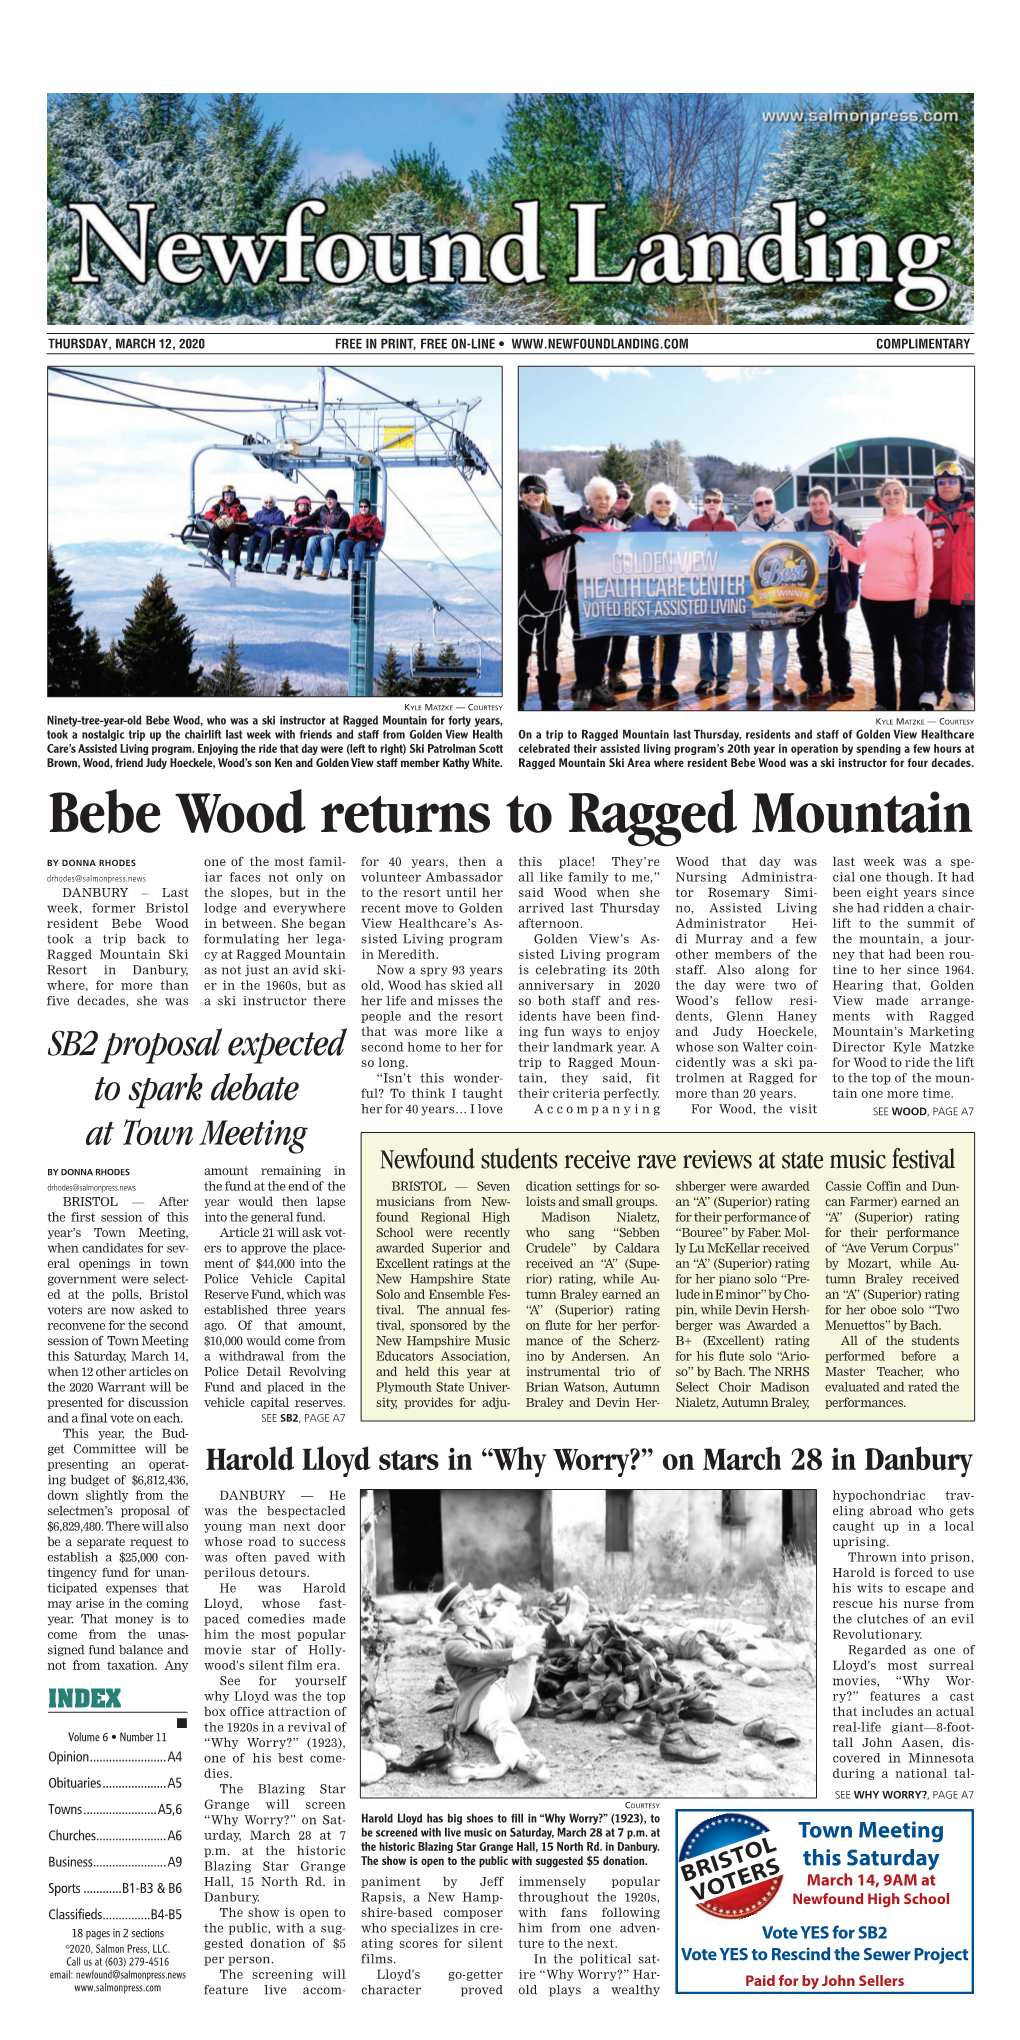 Bebe Wood Returns to Ragged Mountain